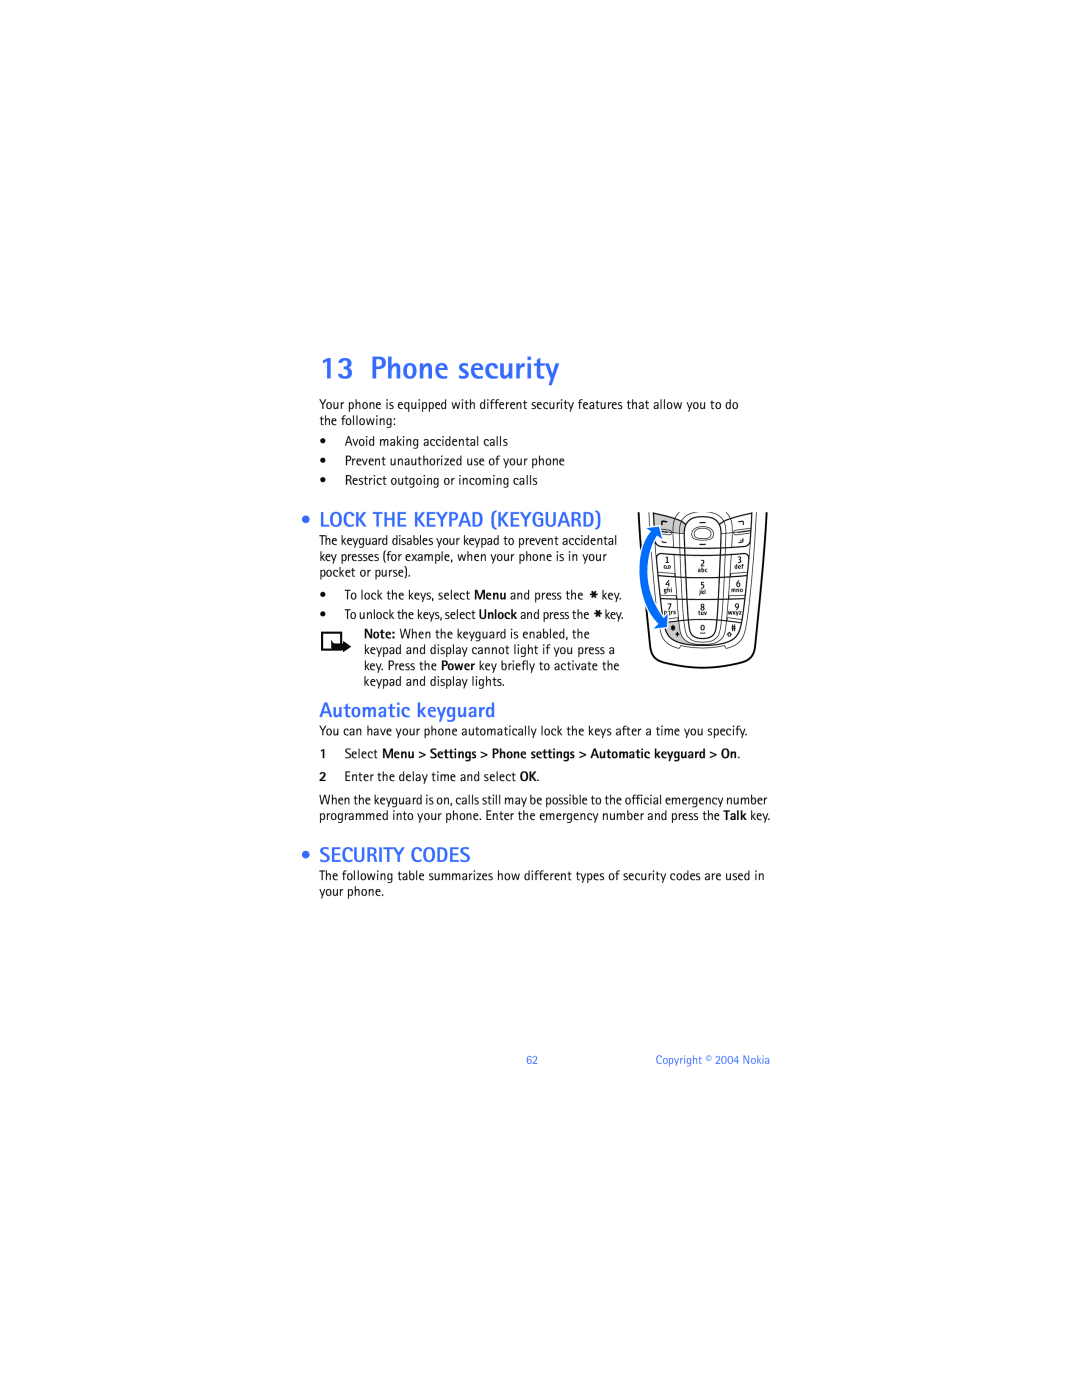 Nokia 6010 warranty Phone security, Lock The Keypad Keyguard, Automatic keyguard, Security Codes 